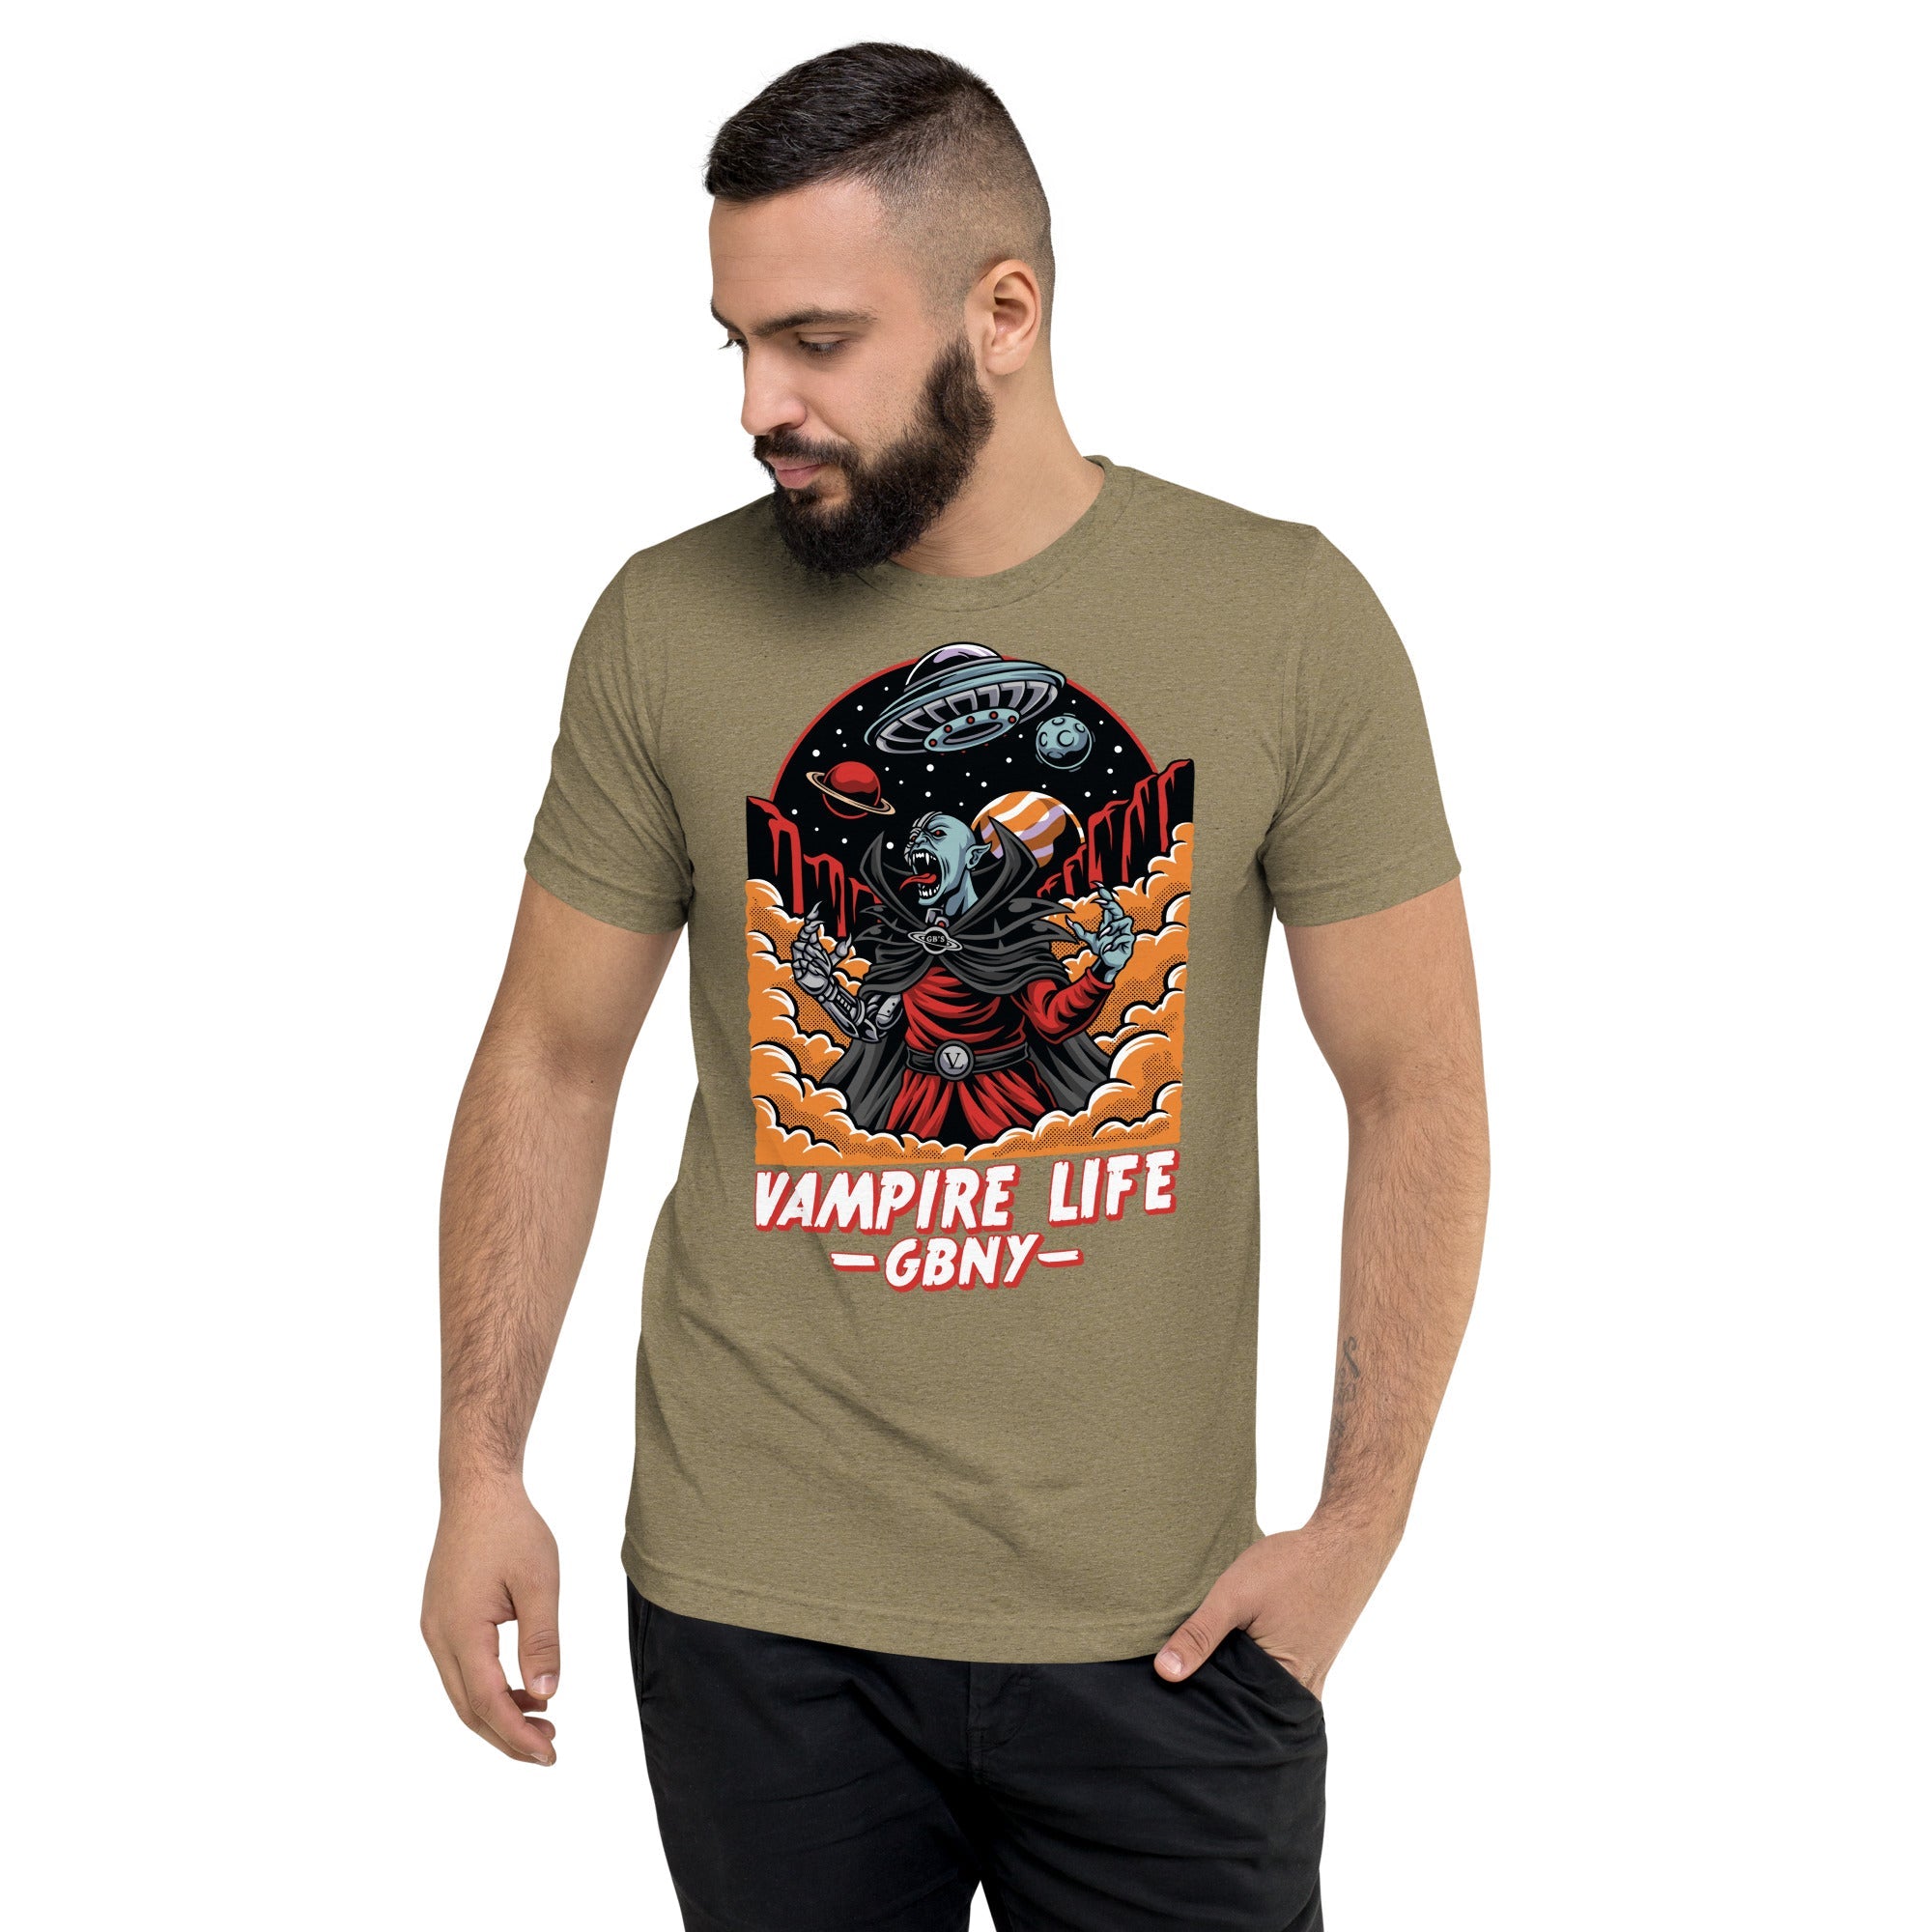 GBNY Olive Triblend / XS Vamp Life X GBNY "Space Vampire" T-shirt - Men's 3872353_17374